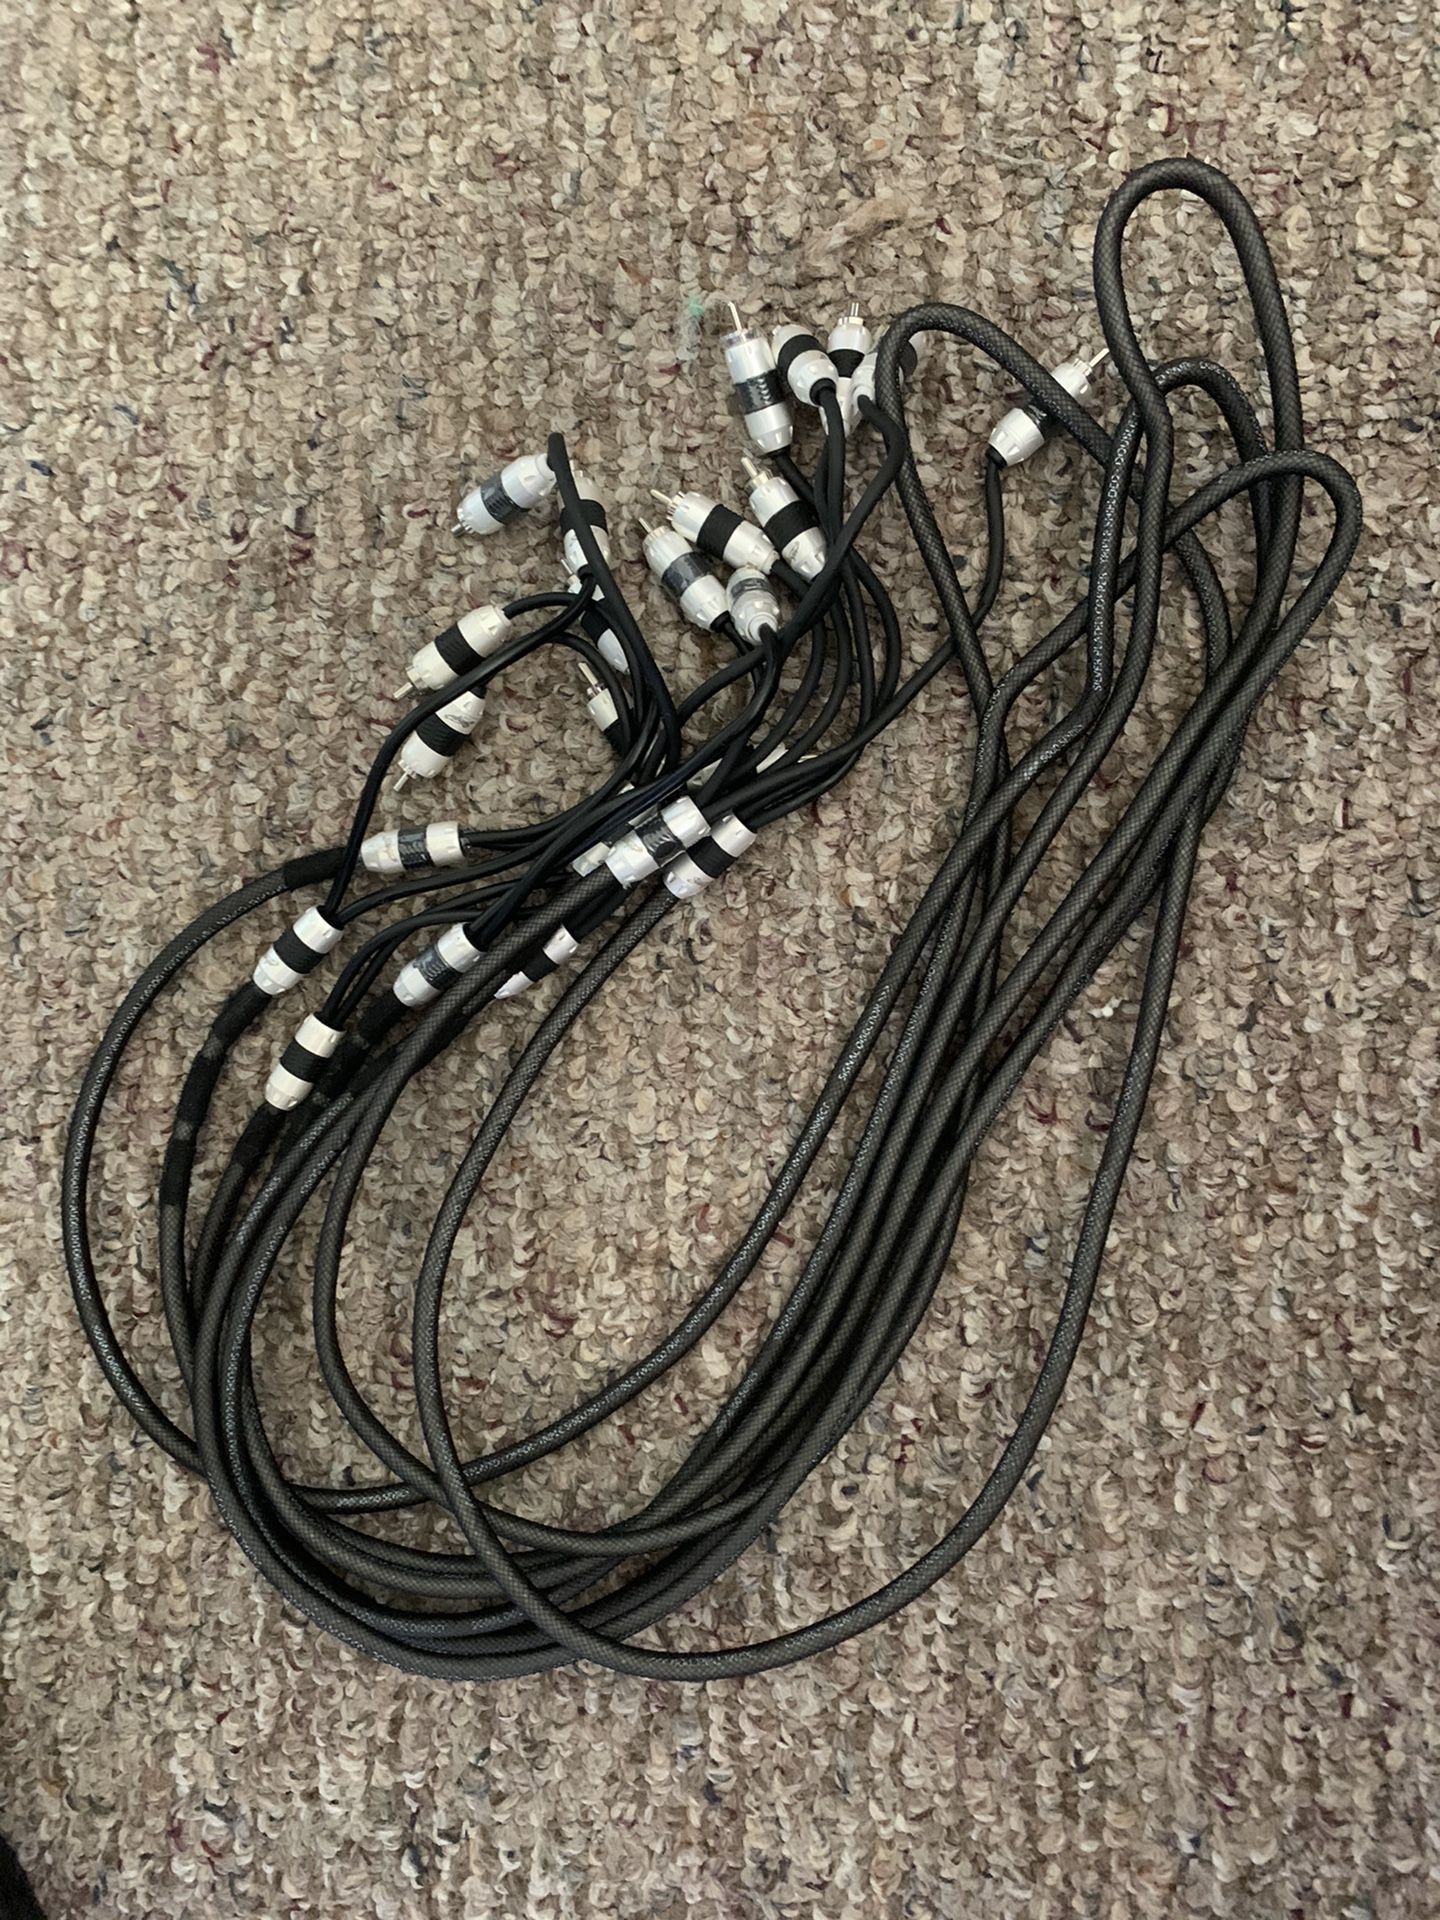 Stinger audio rca cables, set of 4